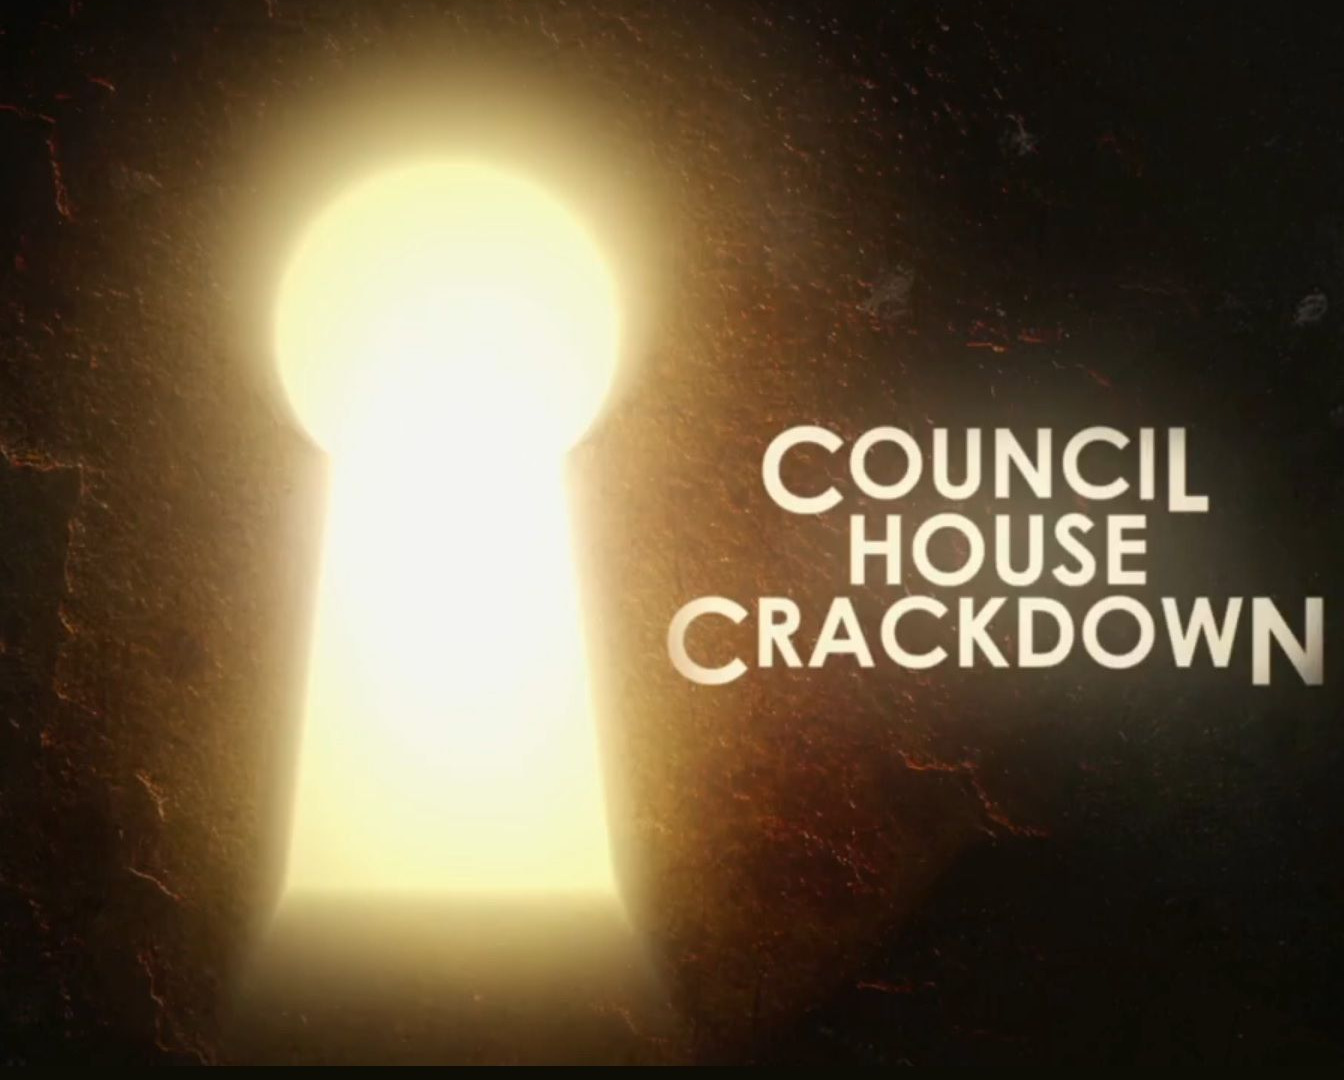 Show Council House Crackdown